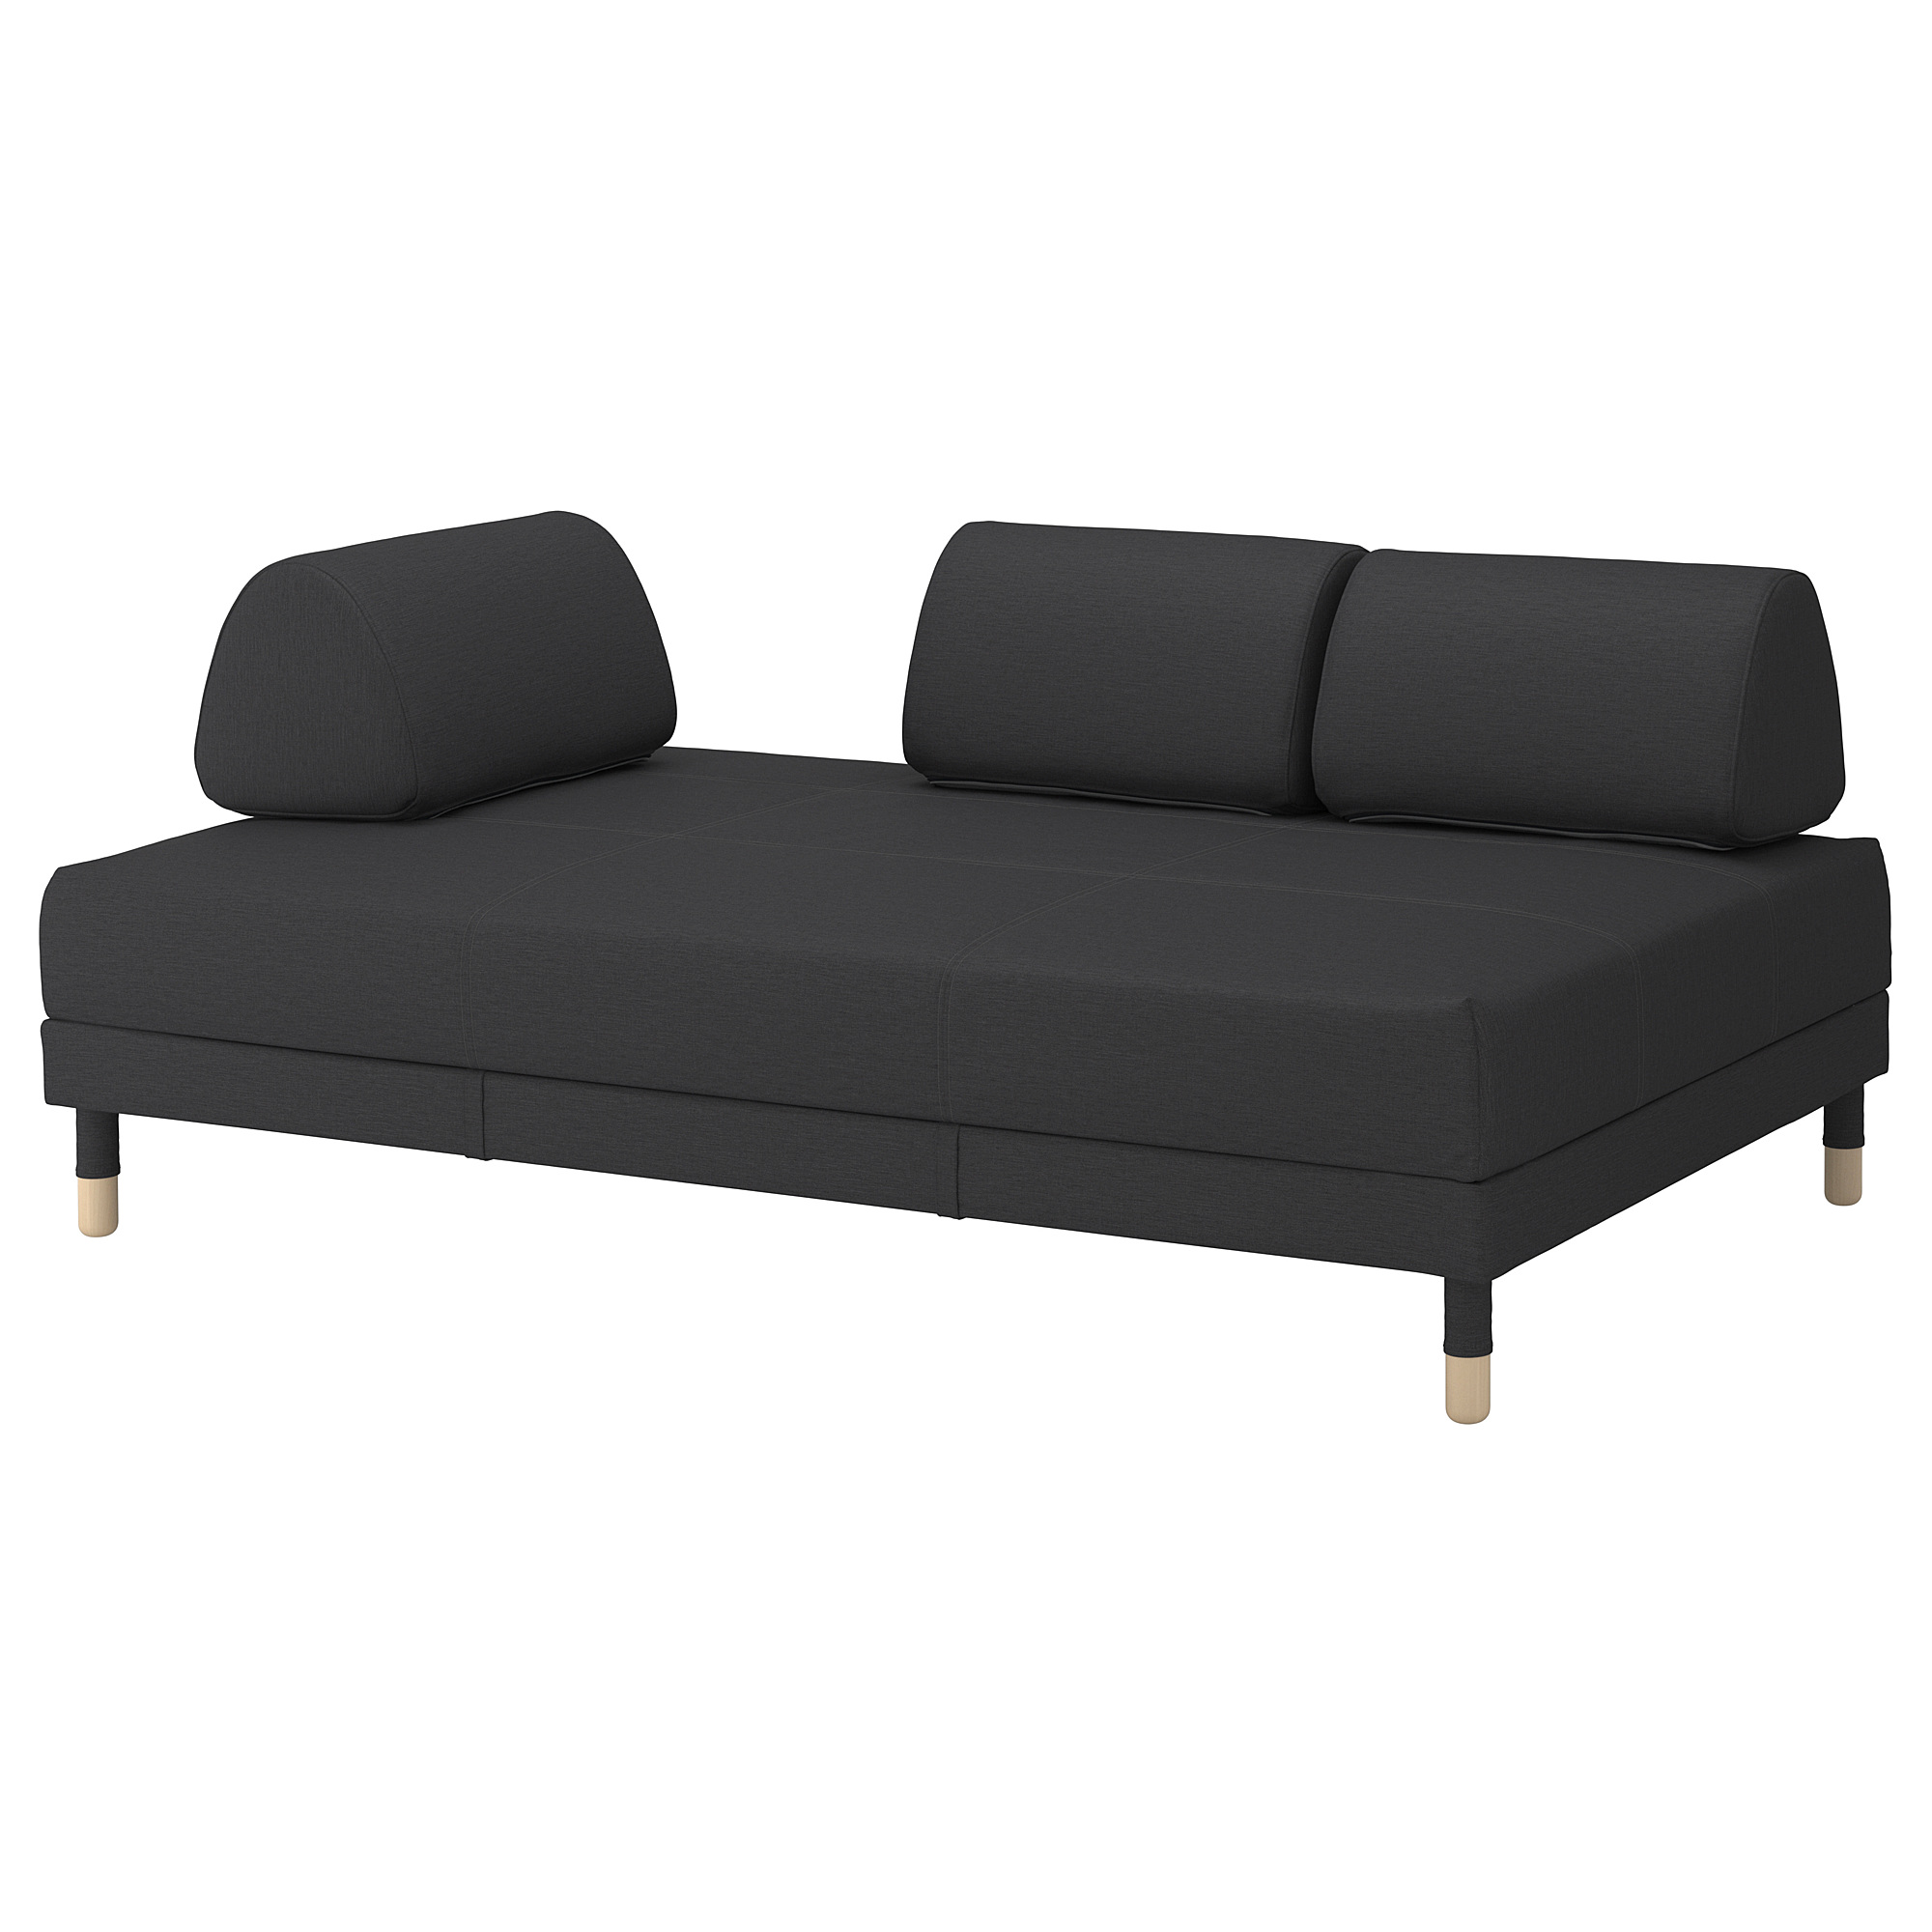 Flottebo Sofa Bed With Storage Vissle Dark Grey Ikea Hong Kong And Macau